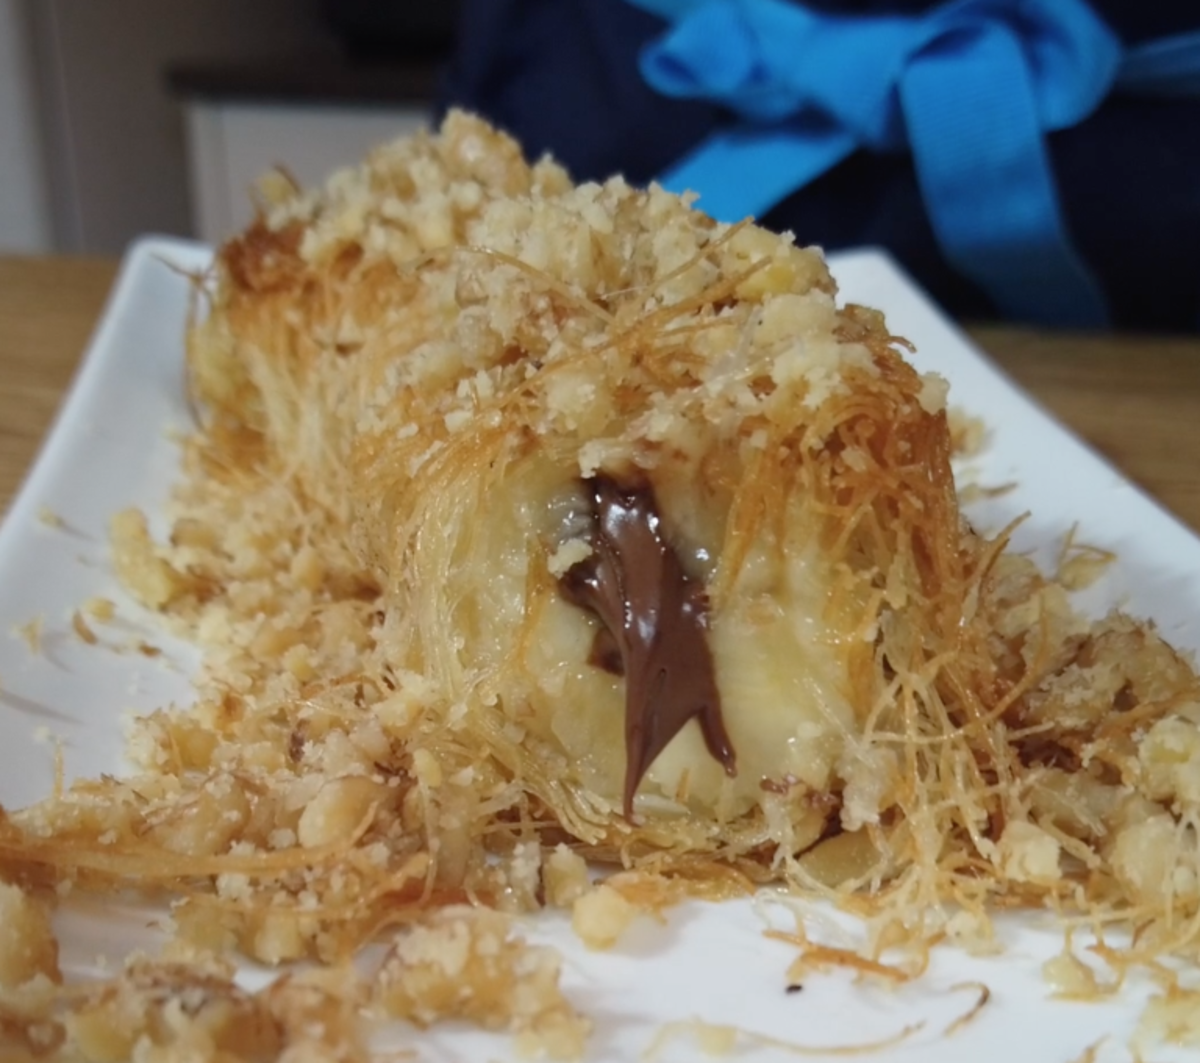 Chocolate Banana Kadaif